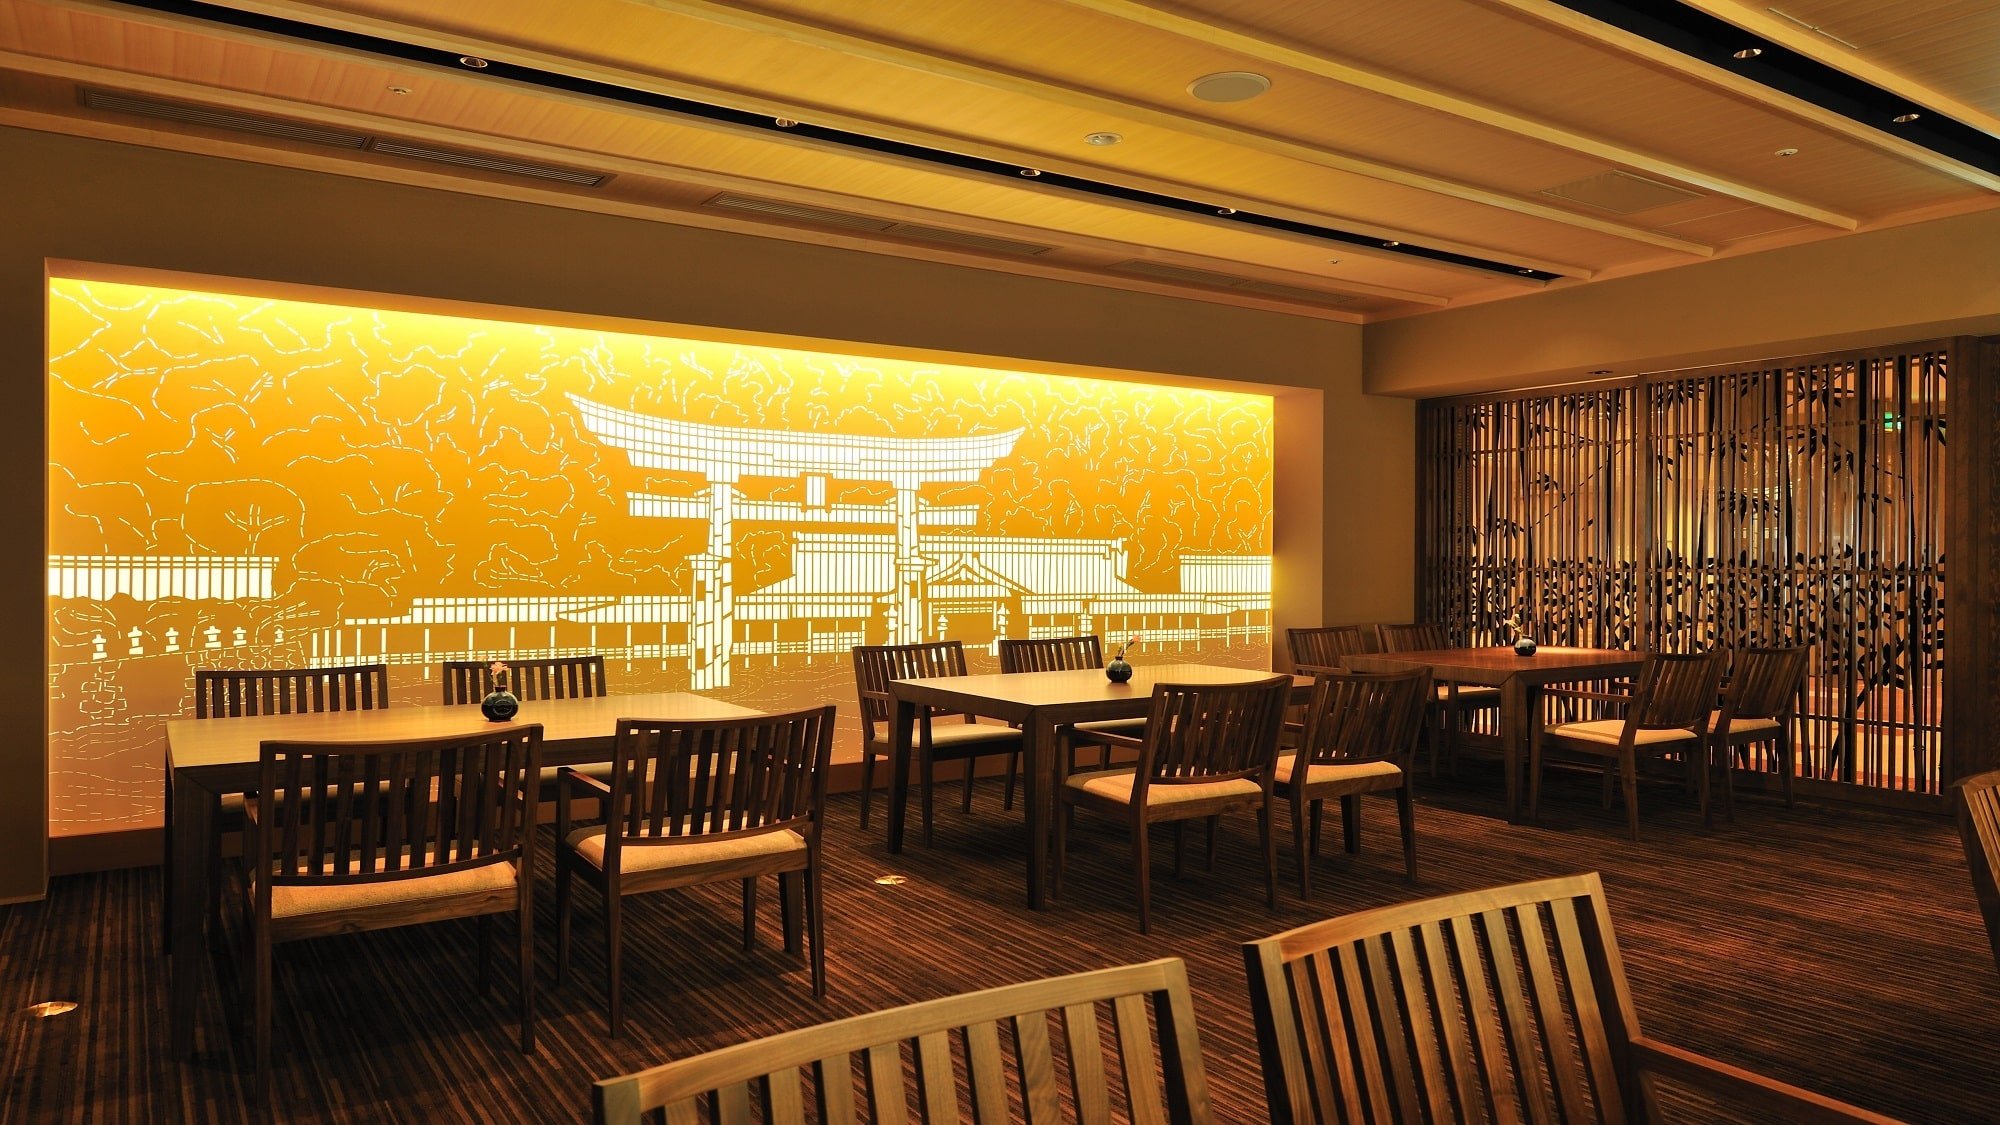 Japanese Restaurant "Setouchi" (Copy)